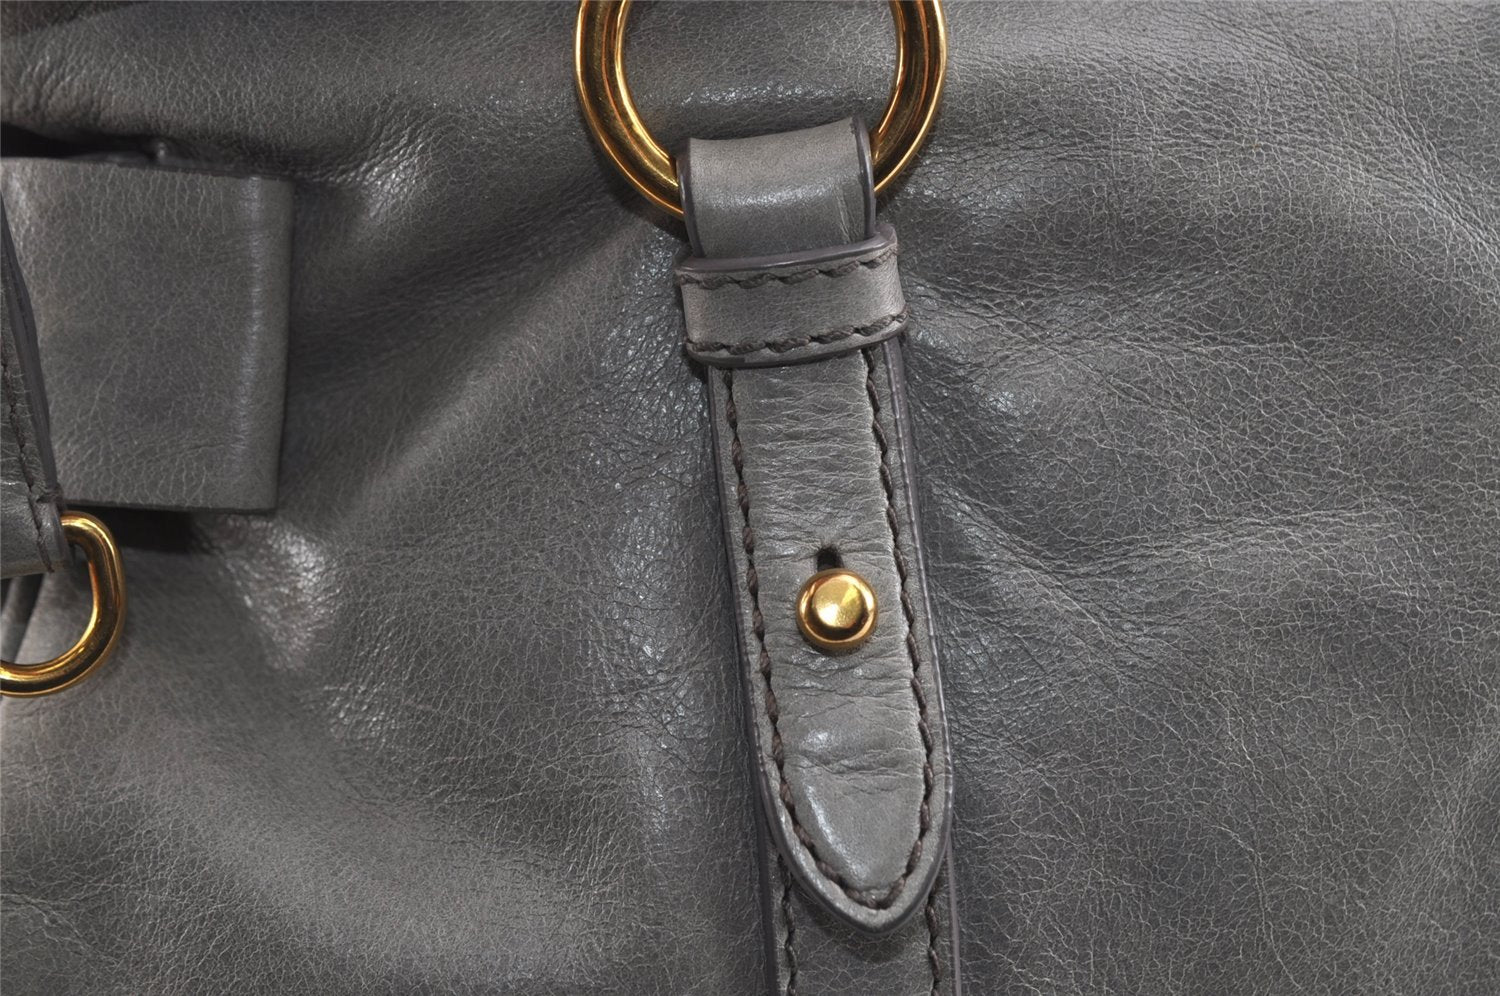 Authentic MIU MIU Vintage Leather 2Way Shoulder Hand Bag Light Blue 5016I